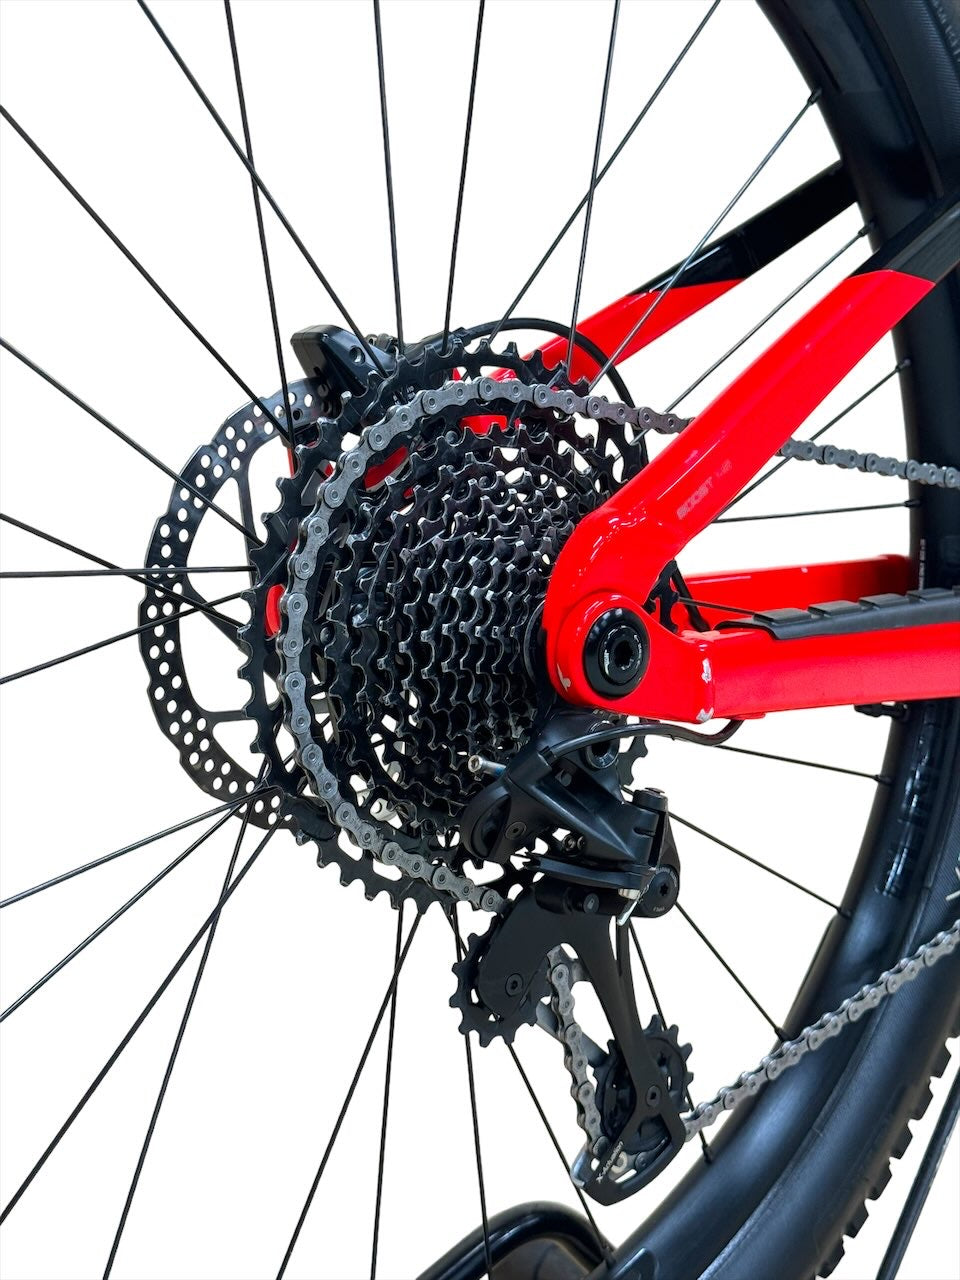 Trek Fuel EX 7 29 inch mountainbike Refurbished Gebruikte fiets